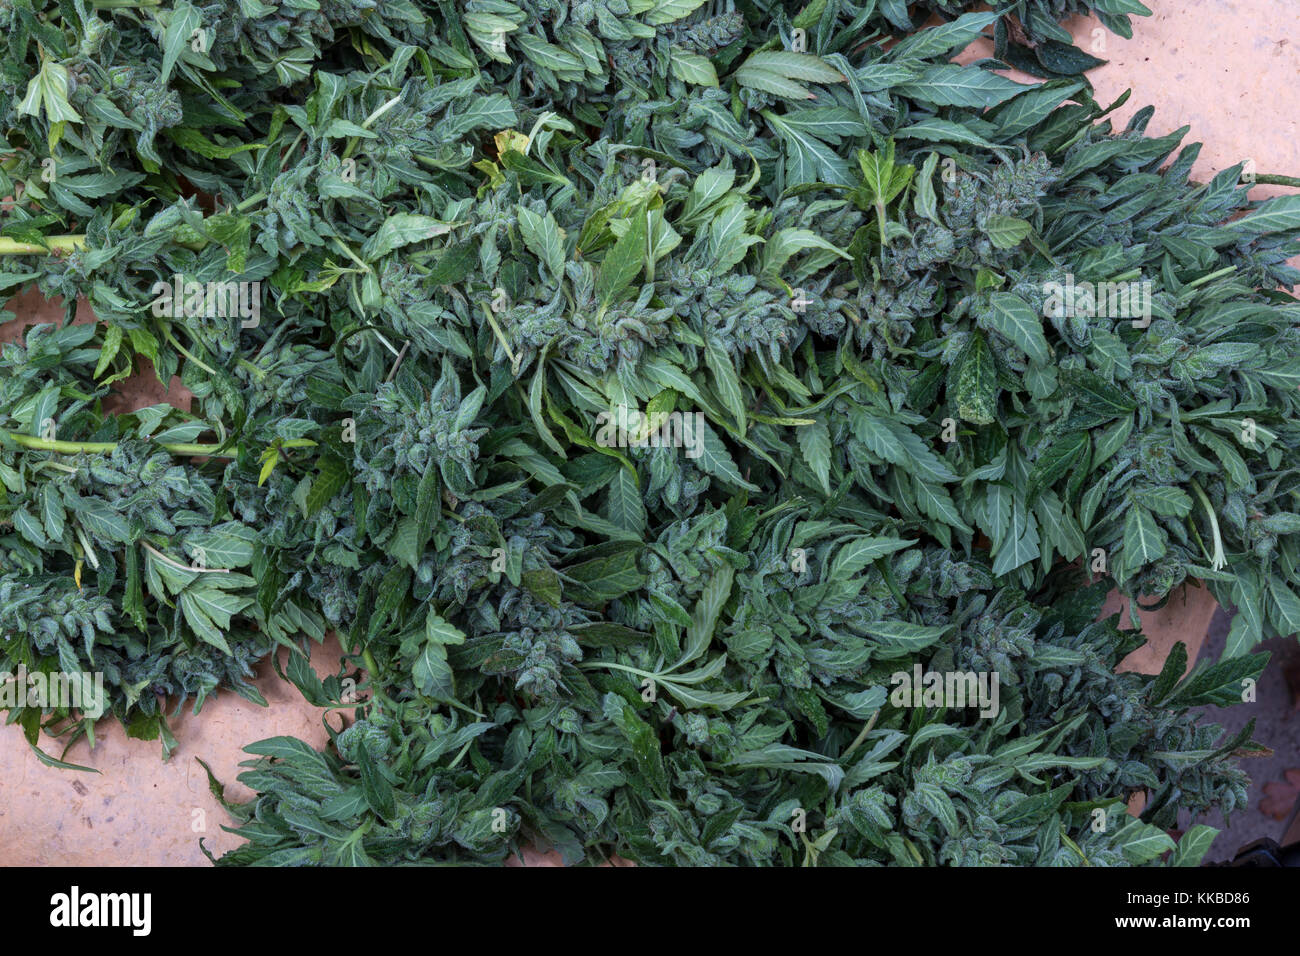 indica-sativa hybrid, trichomes, colas, cannabis plant, marijuana plant, medical marijuana, alternative medicine, medicinal plant, California Stock Photo